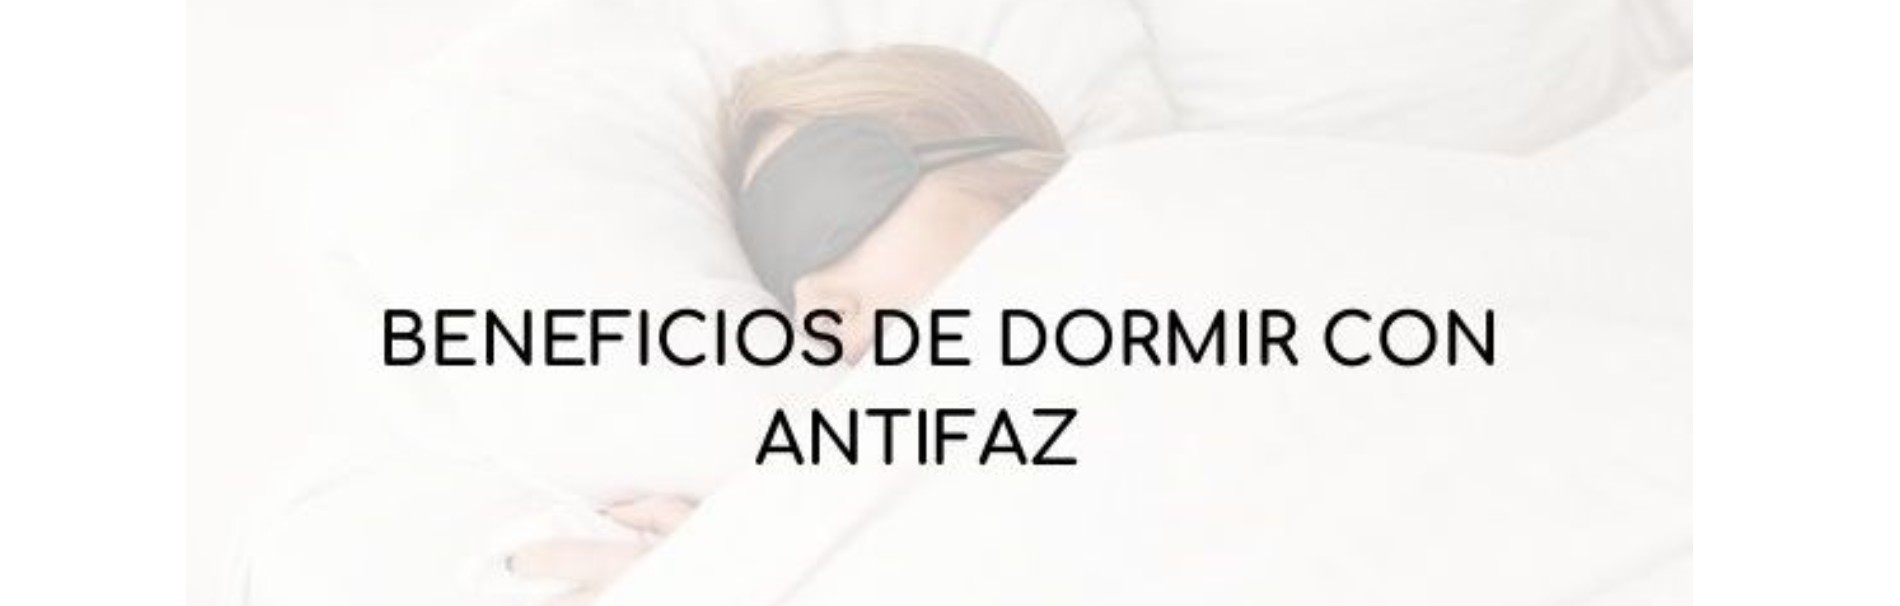 Beneficios de dormir con antifaz